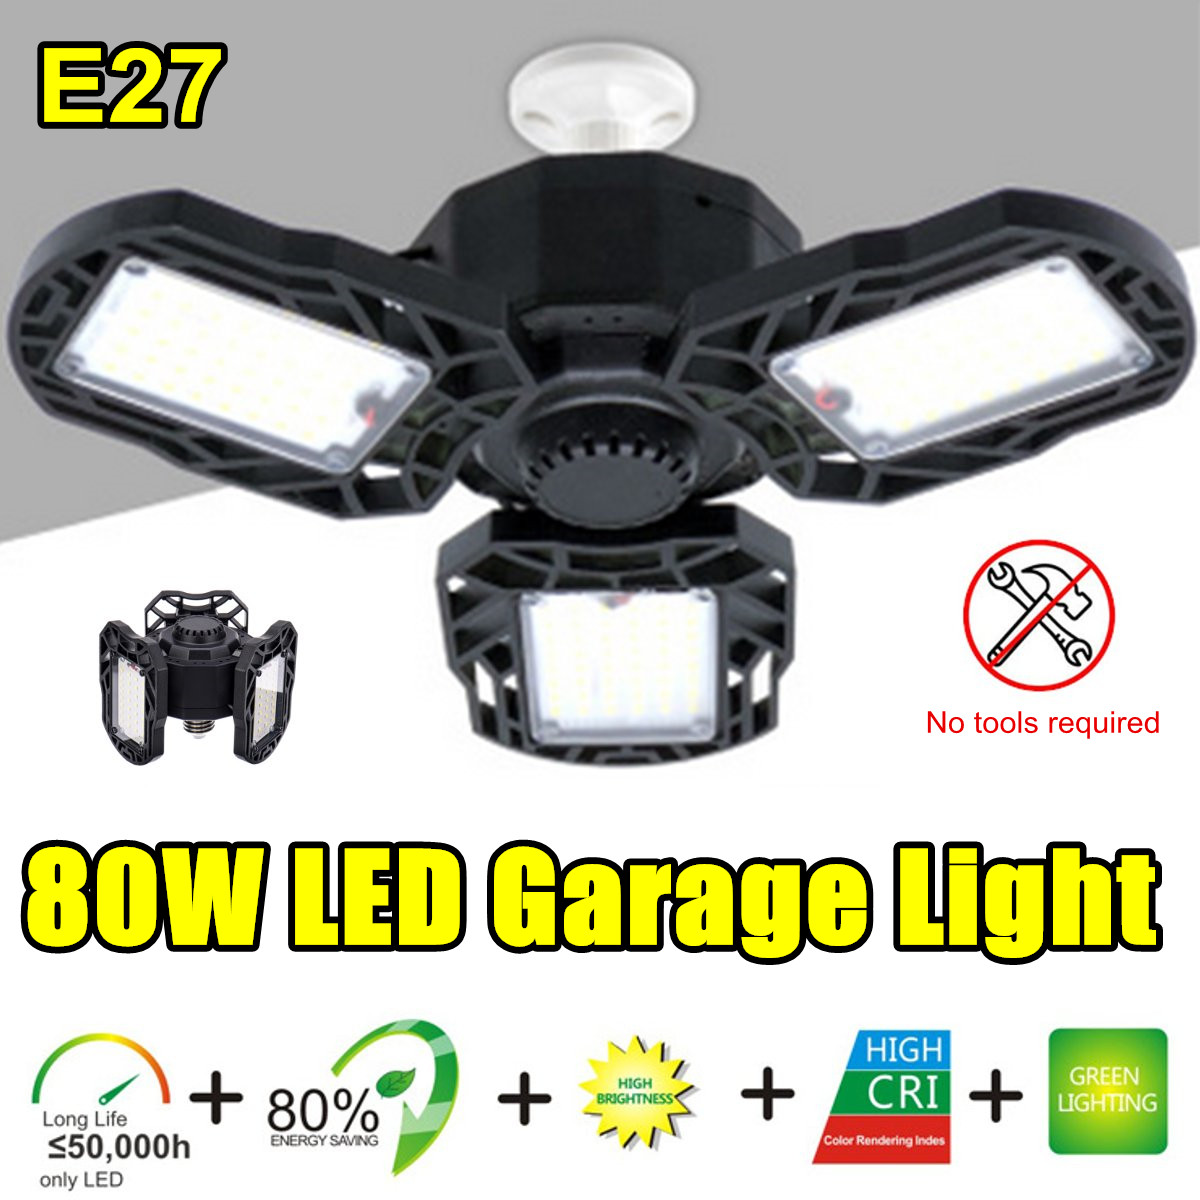 80W-LED-Garage-Lamp-Three-Leaves-E27-Light-Bulb-Deformable-Shop-Work-Lighting-Home-Ceiling-Fixtures-1691074-1